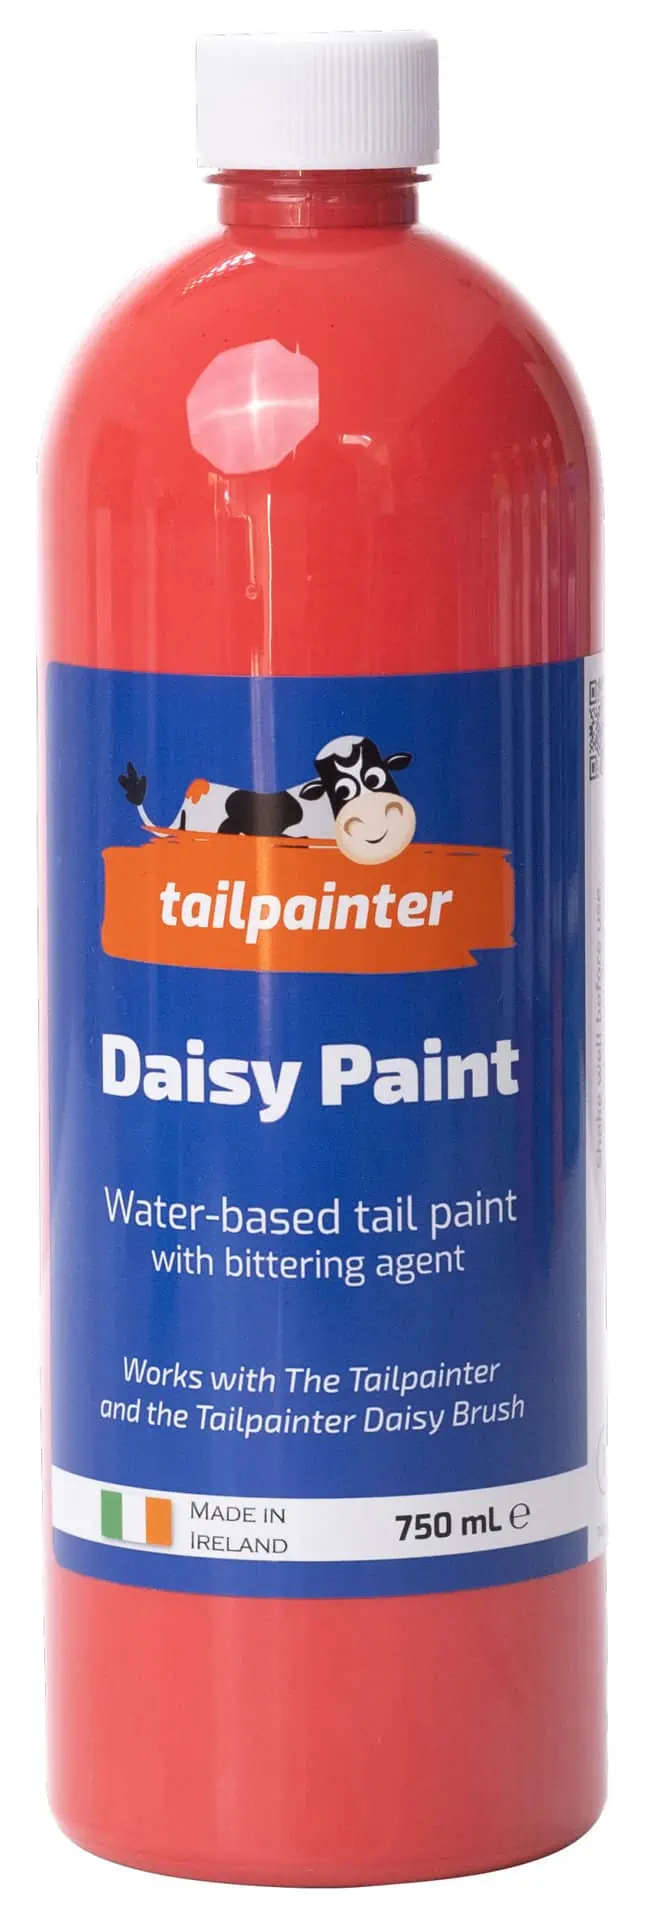 Daisy Paint Tail Paint